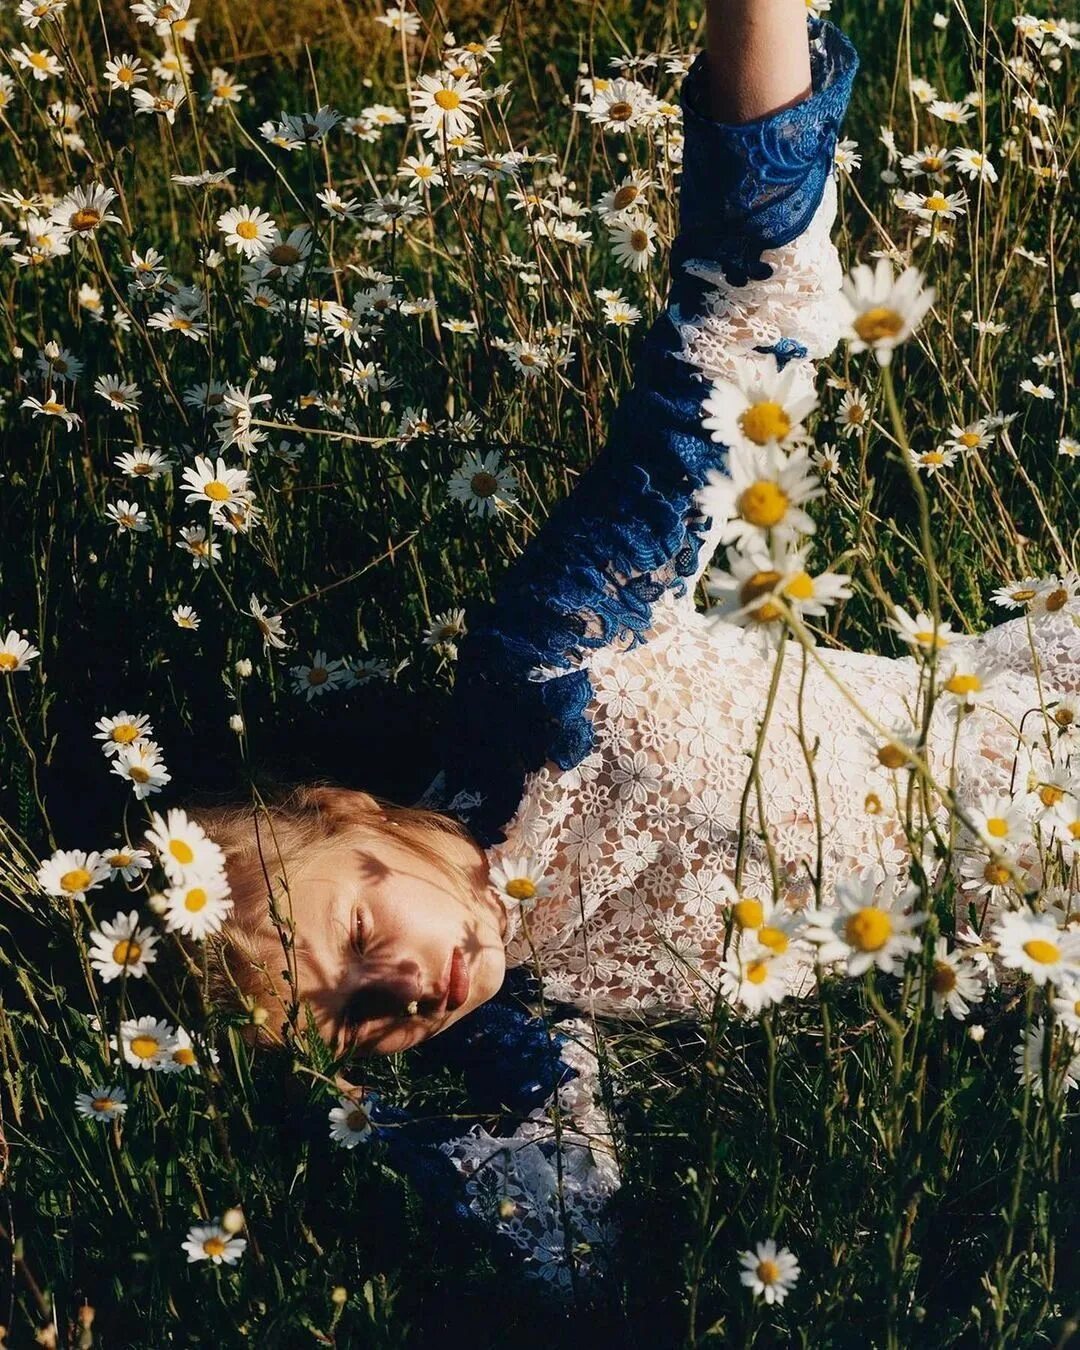 Poppy Kain в Instagram: "Last days of summer" .